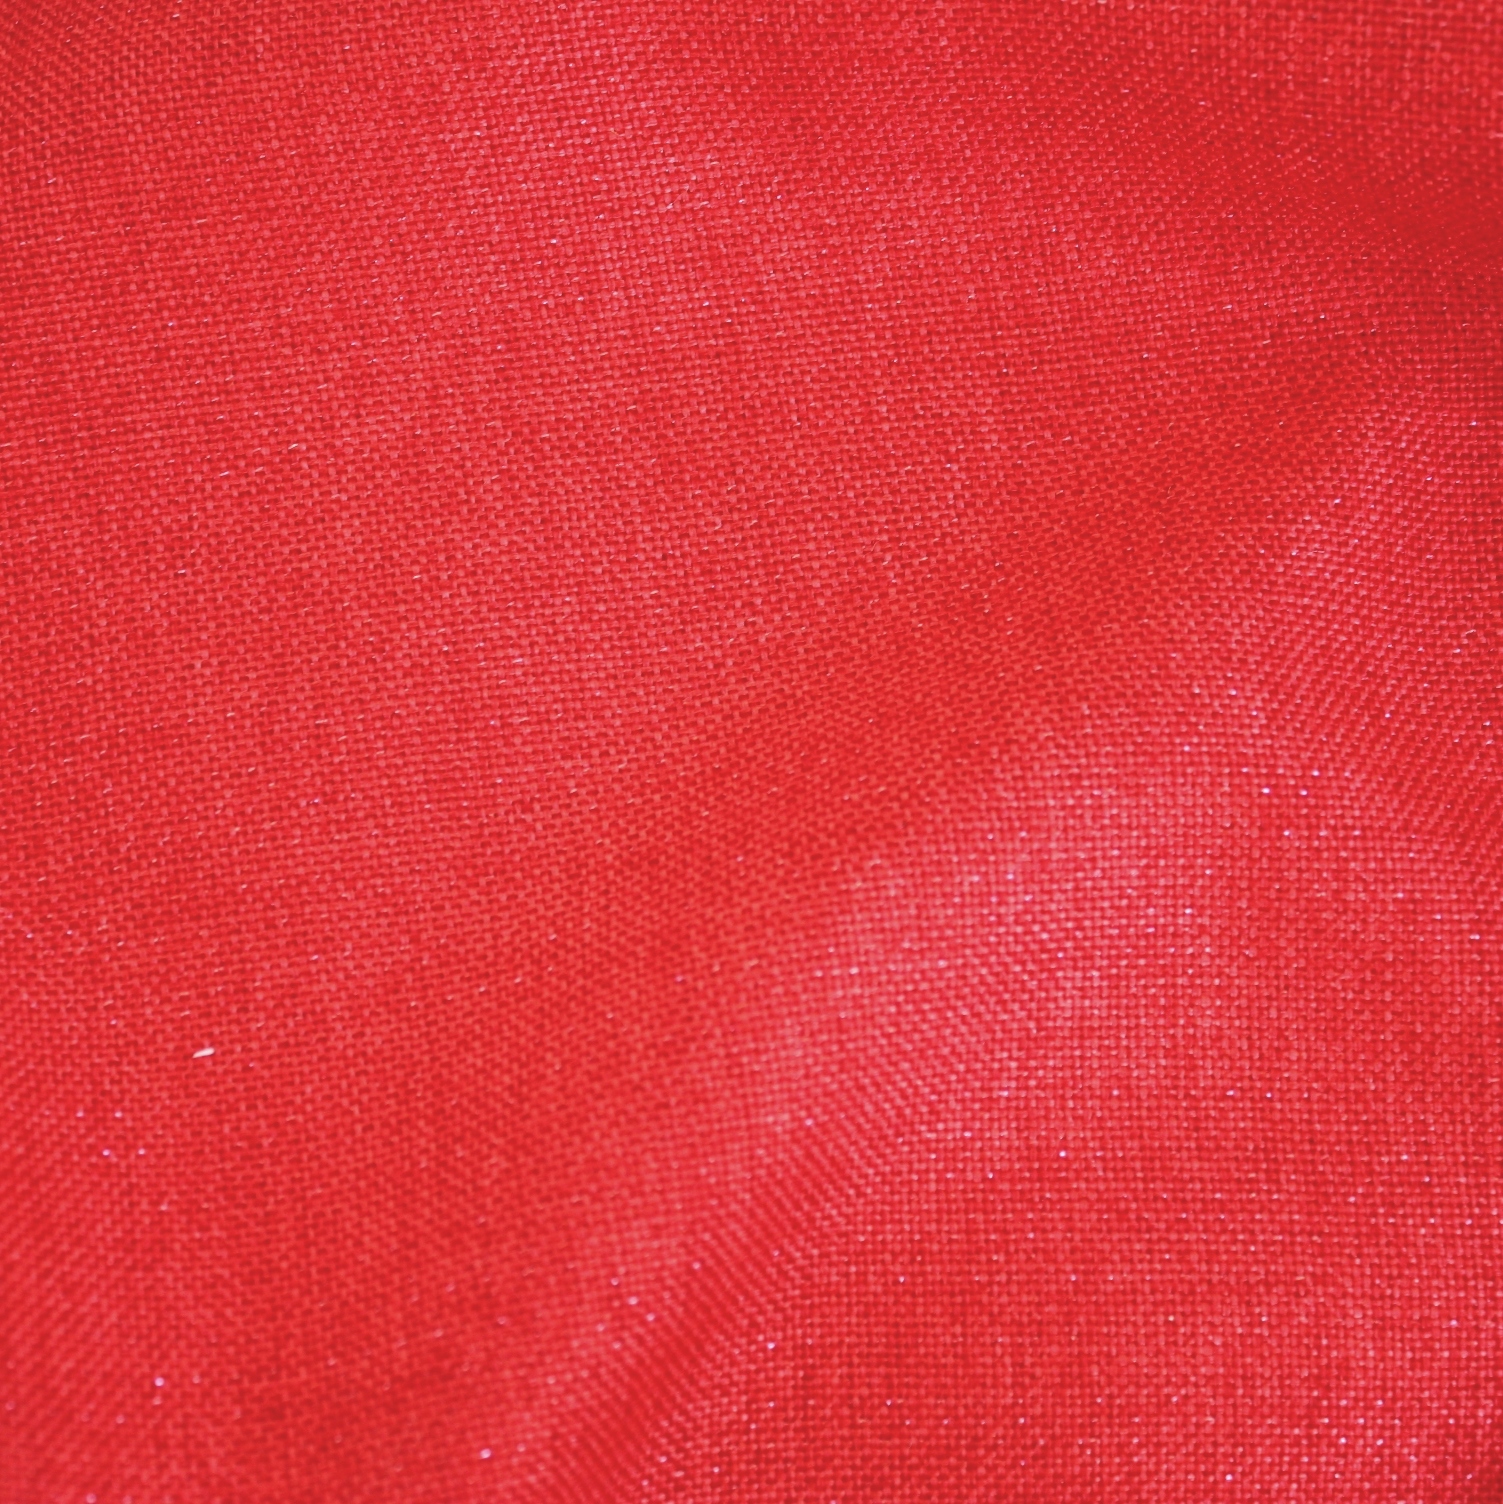 Cardinal Red Metallic Linen Rental Tablecloth - Cloth Connection